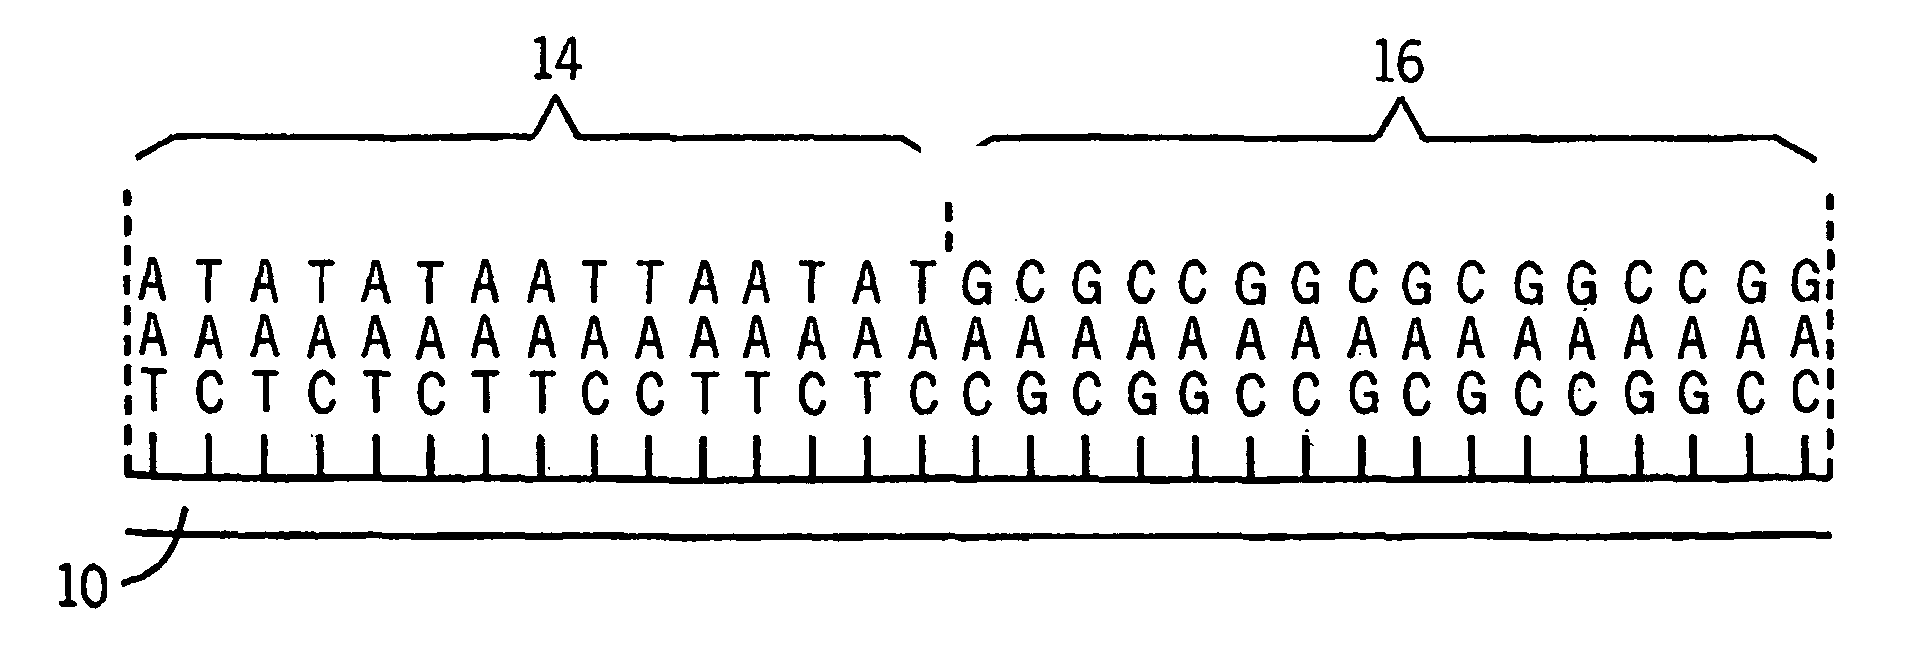 Microarrays having multiple oligonucleotides in single array features